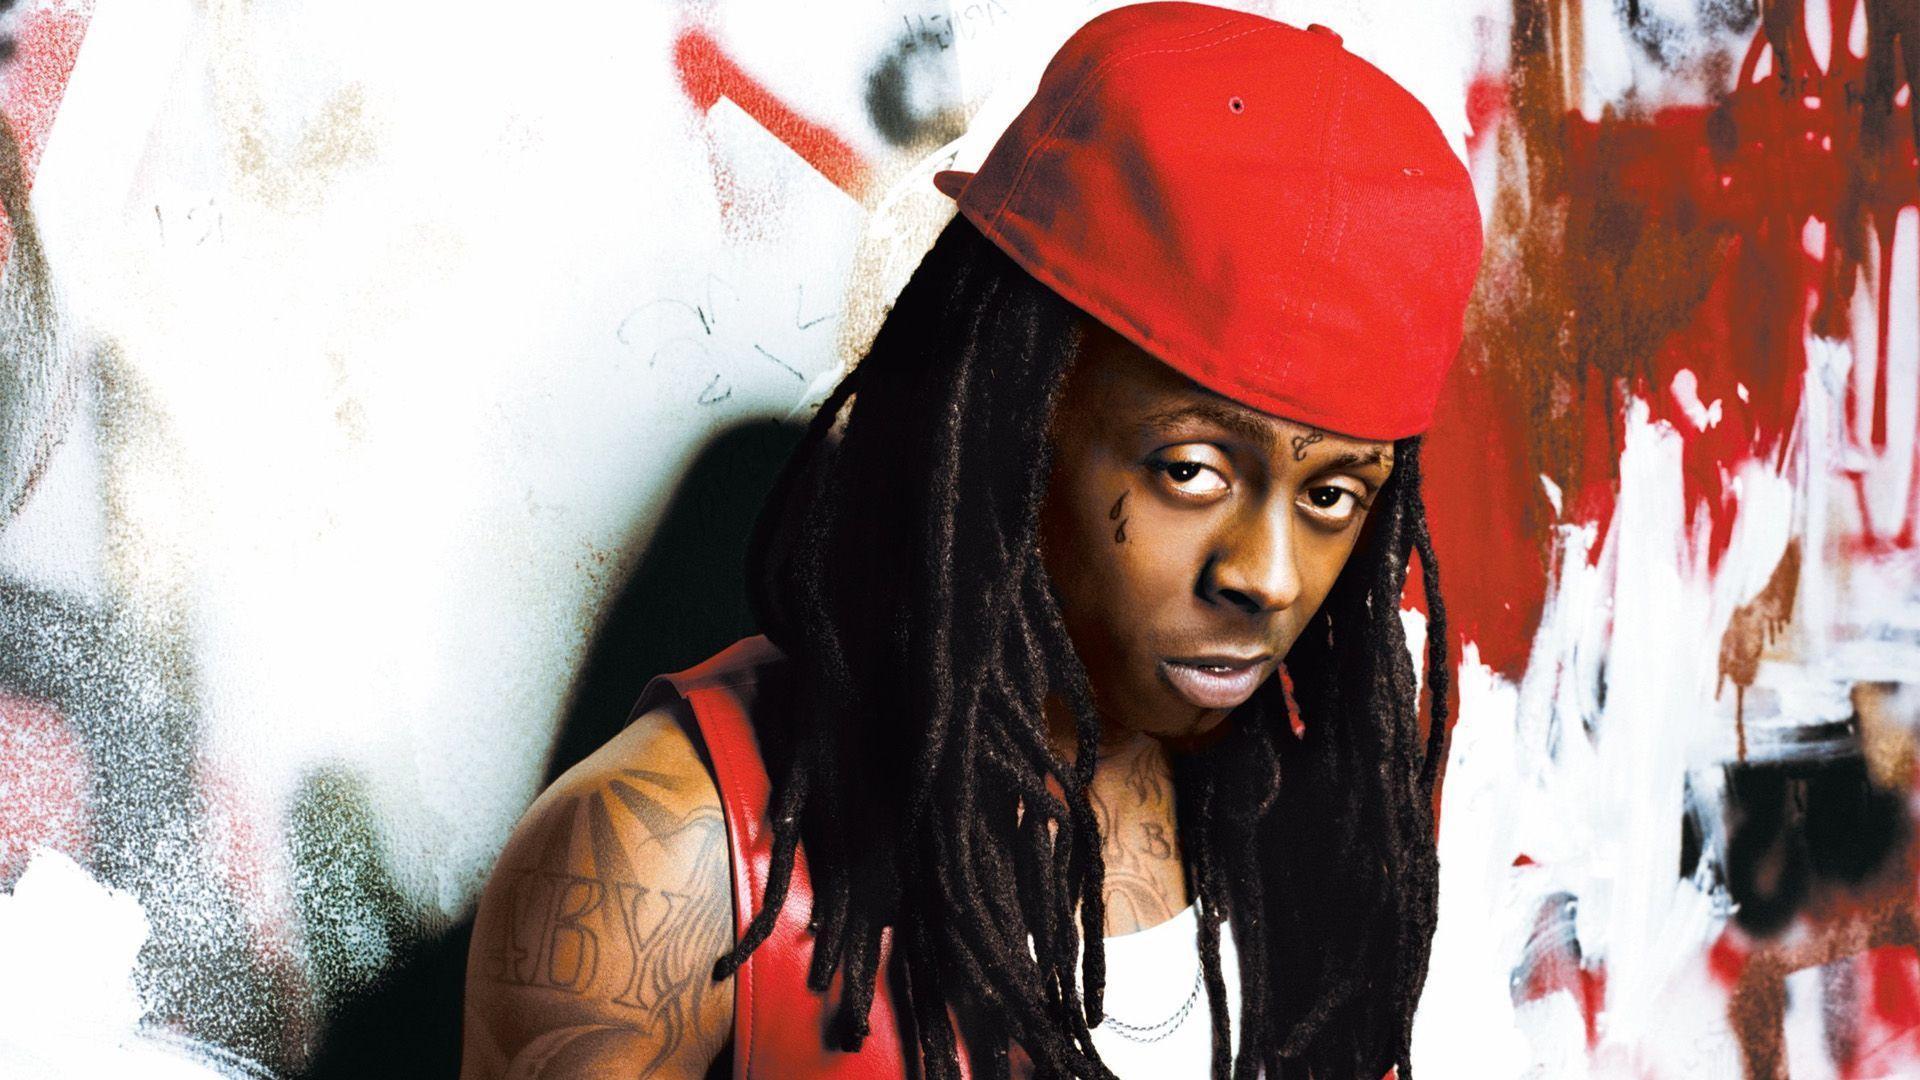 Lil Wayne Wallpaper 21254 Image